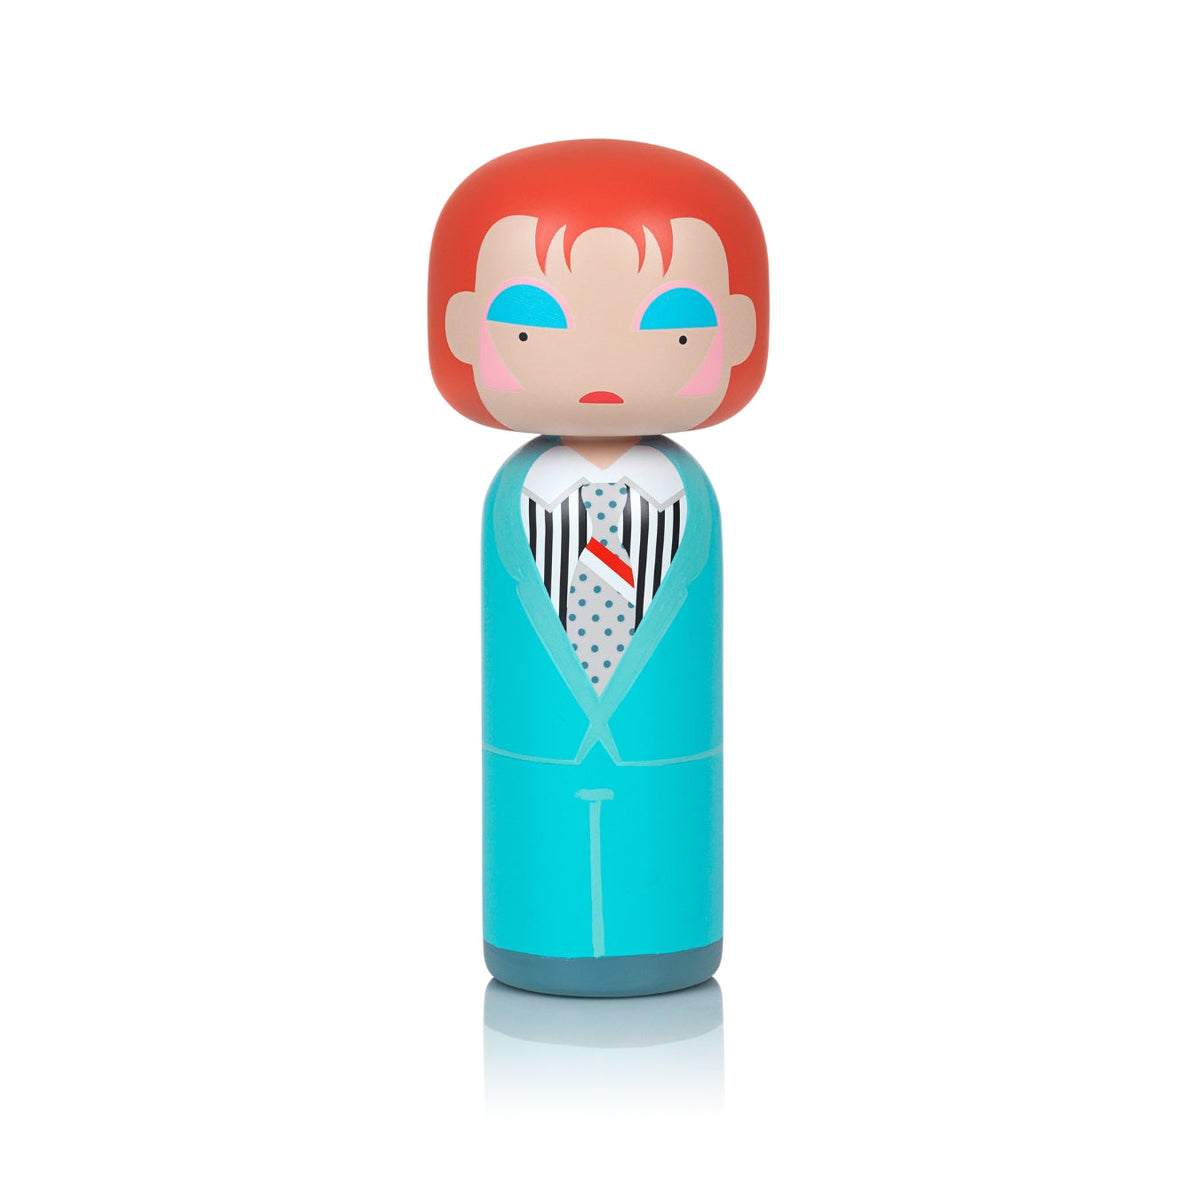 Kokeshi Doll - David Bowie Life on Mars? by Lucie Kaas